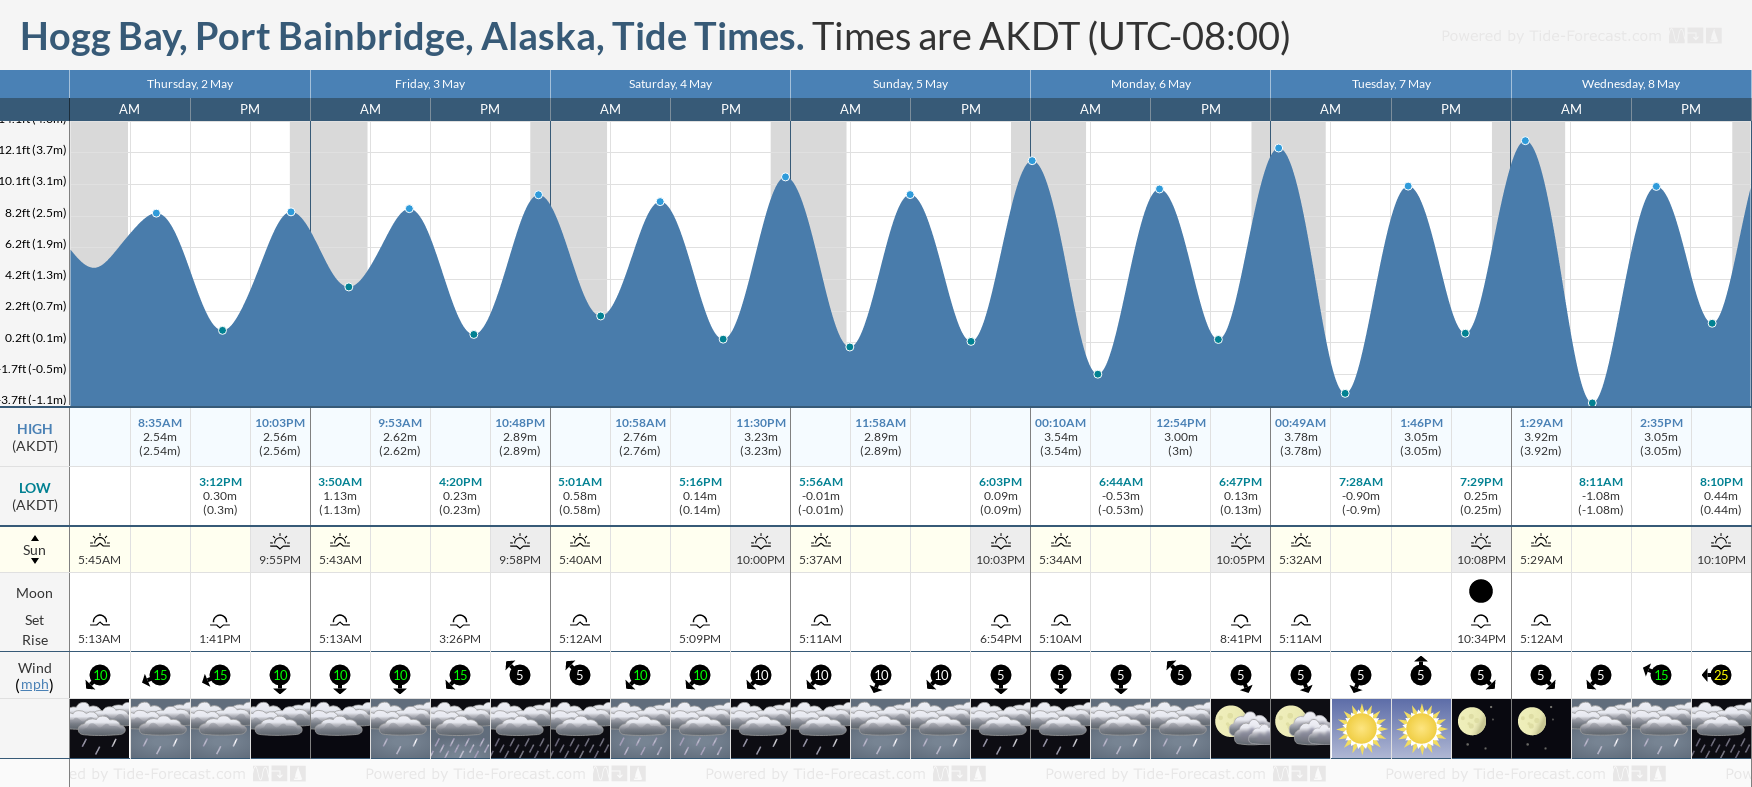 Hogg Bay, Port Bainbridge, Alaska Tide Chart including high and low tide tide times for the next 7 days